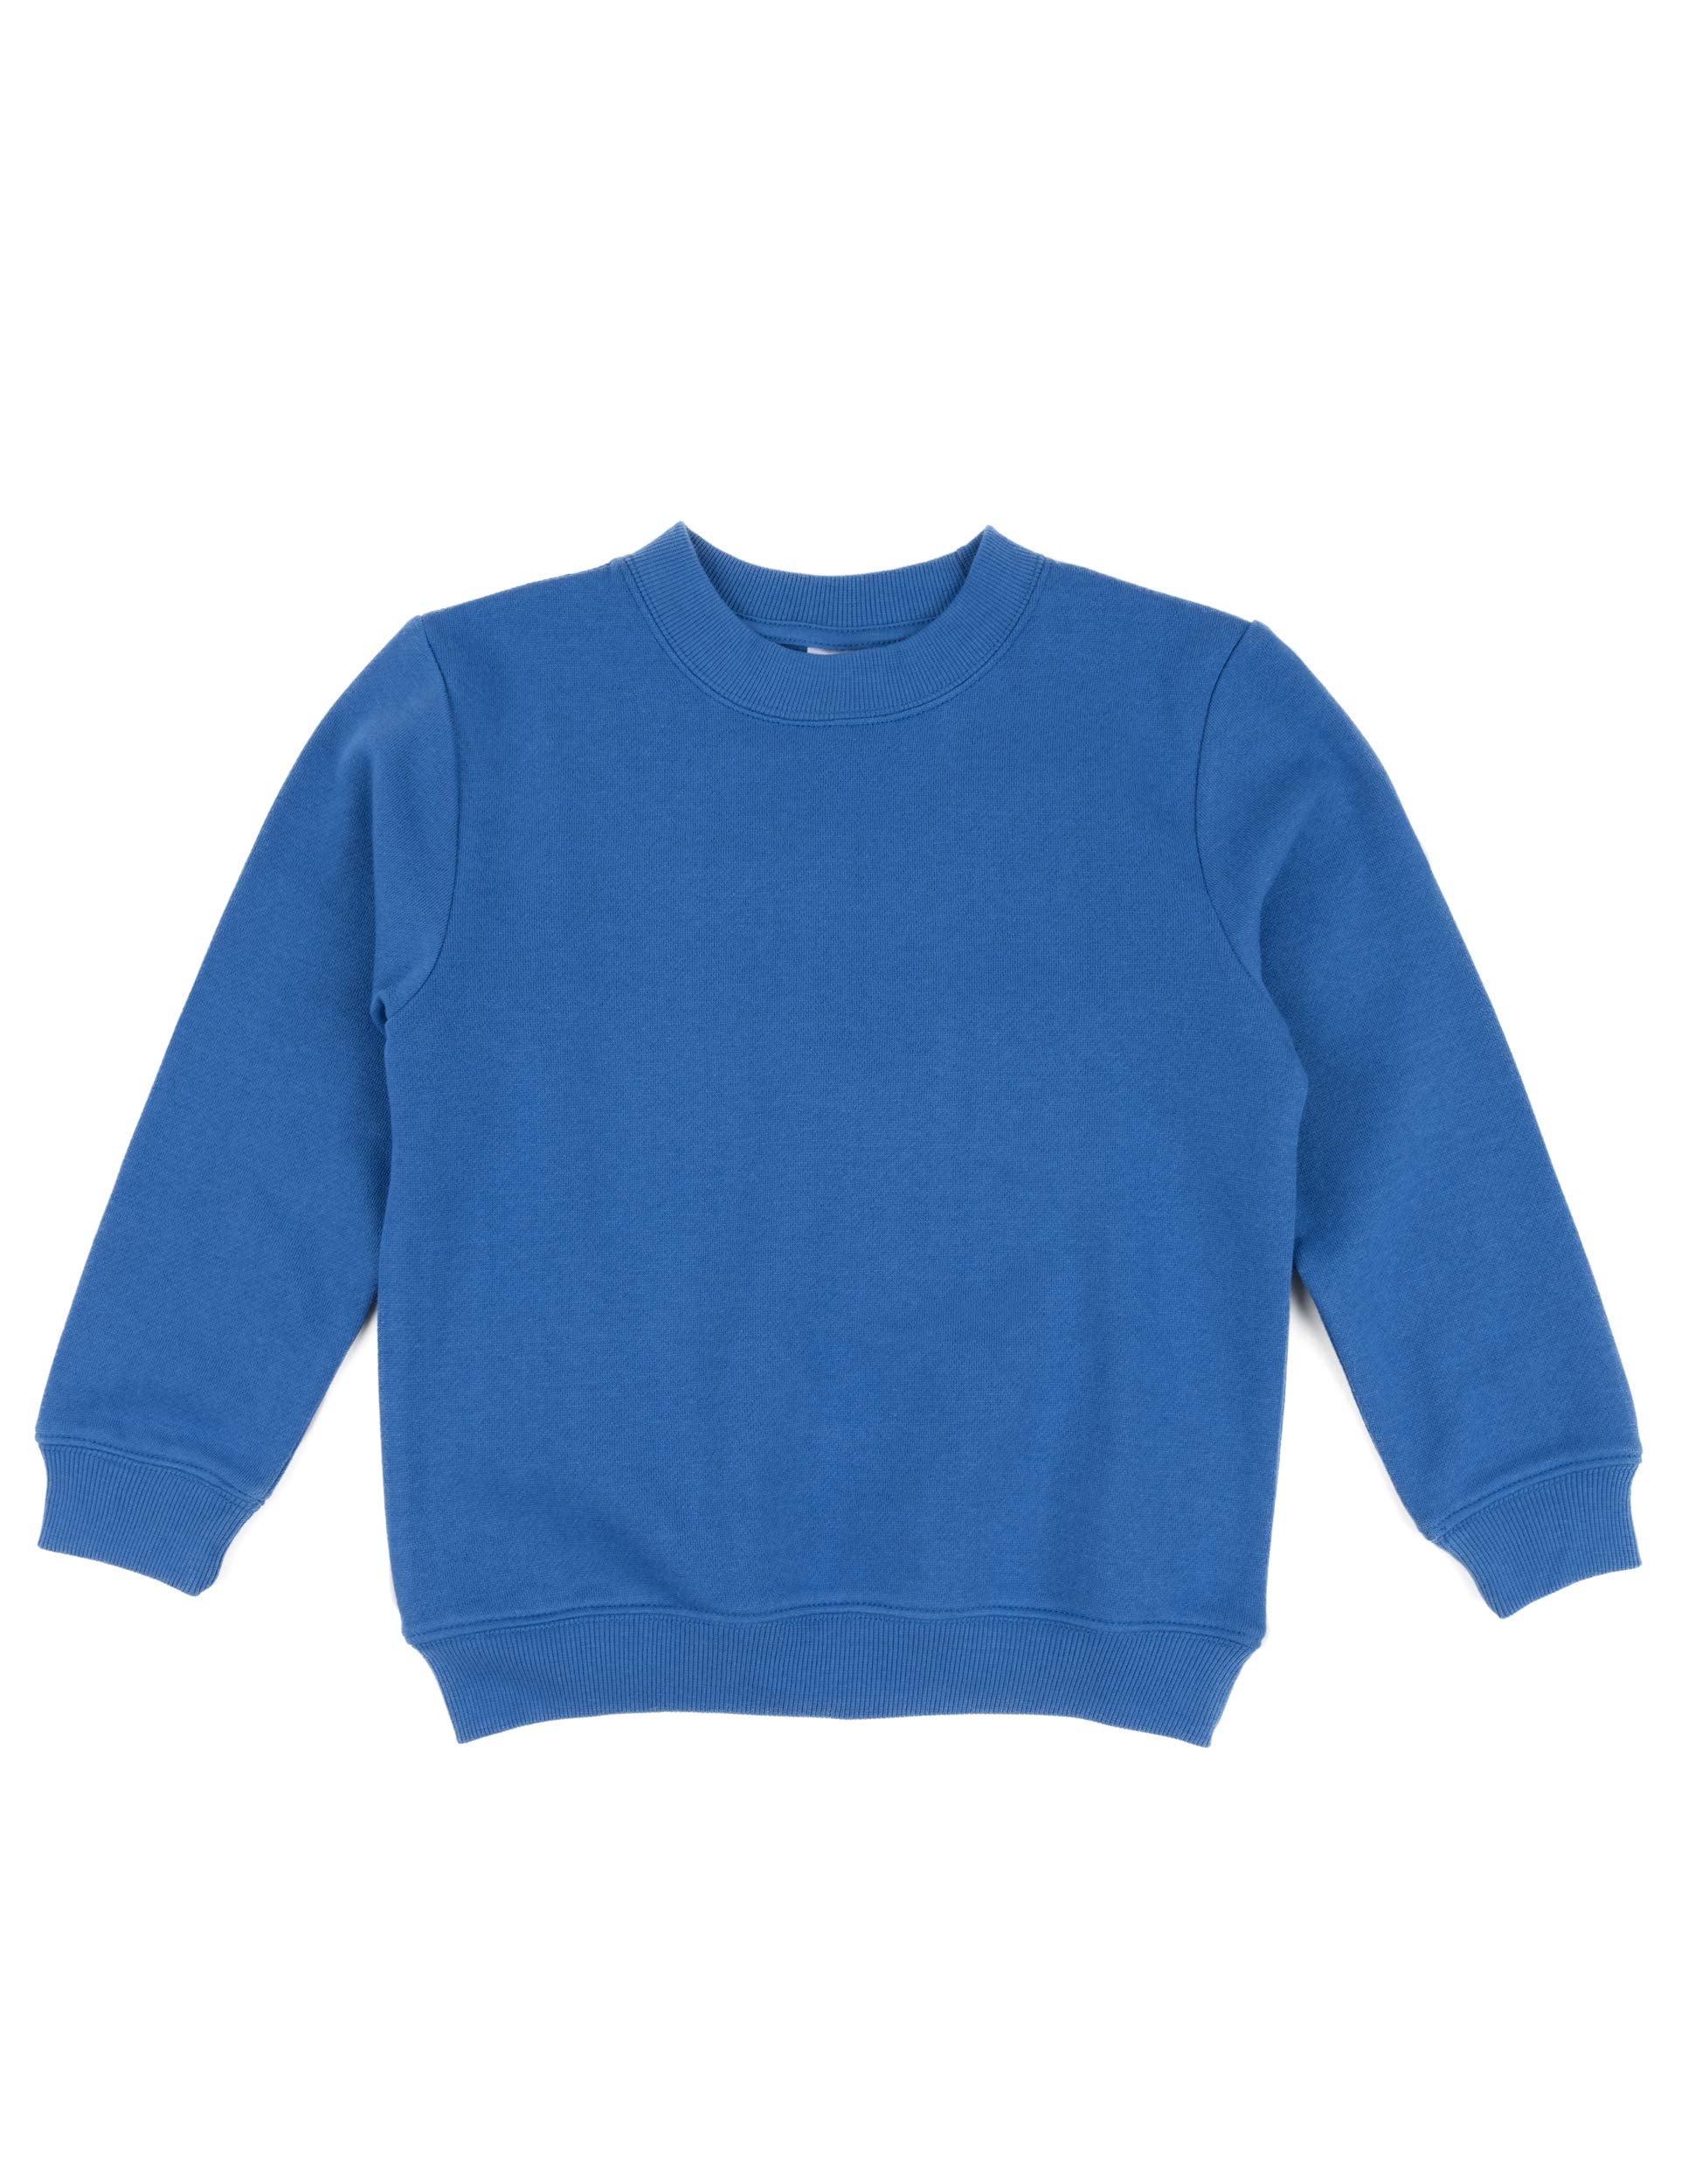 Leveret Kids /& Toddler Sweatshirt Boys Girls Long Sleeve Shirt Variety of Colors Size 2-14 Years